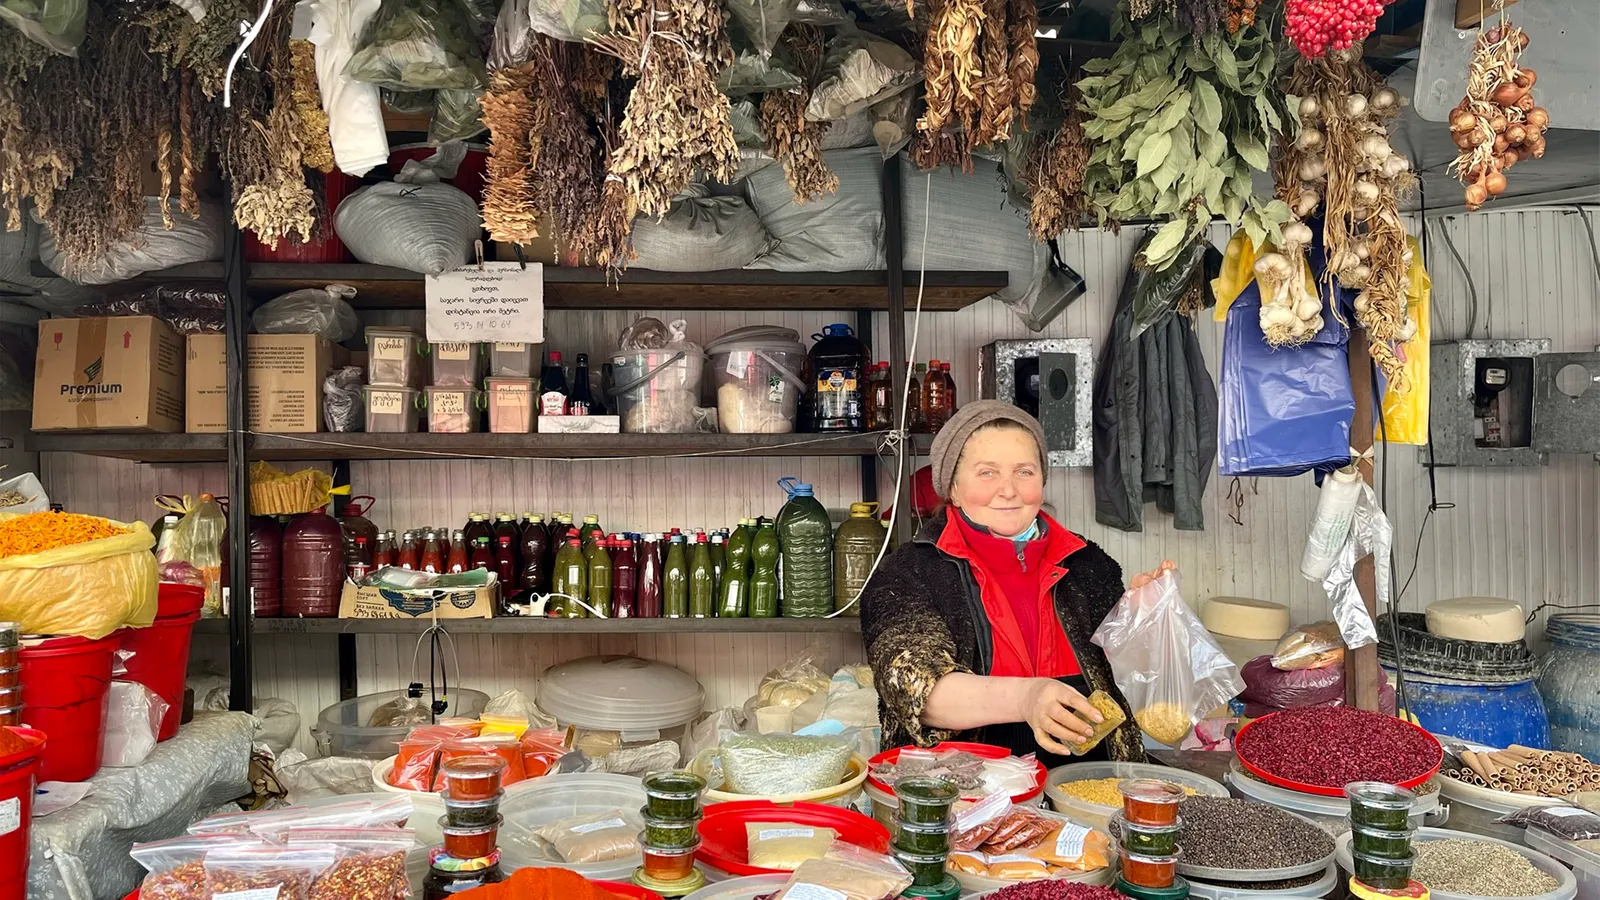 Louisa Valerangovna sells spices at her stall in Tbilisi’s Dezerter Bazaar (Credit: Sarah Freeman and BBC)